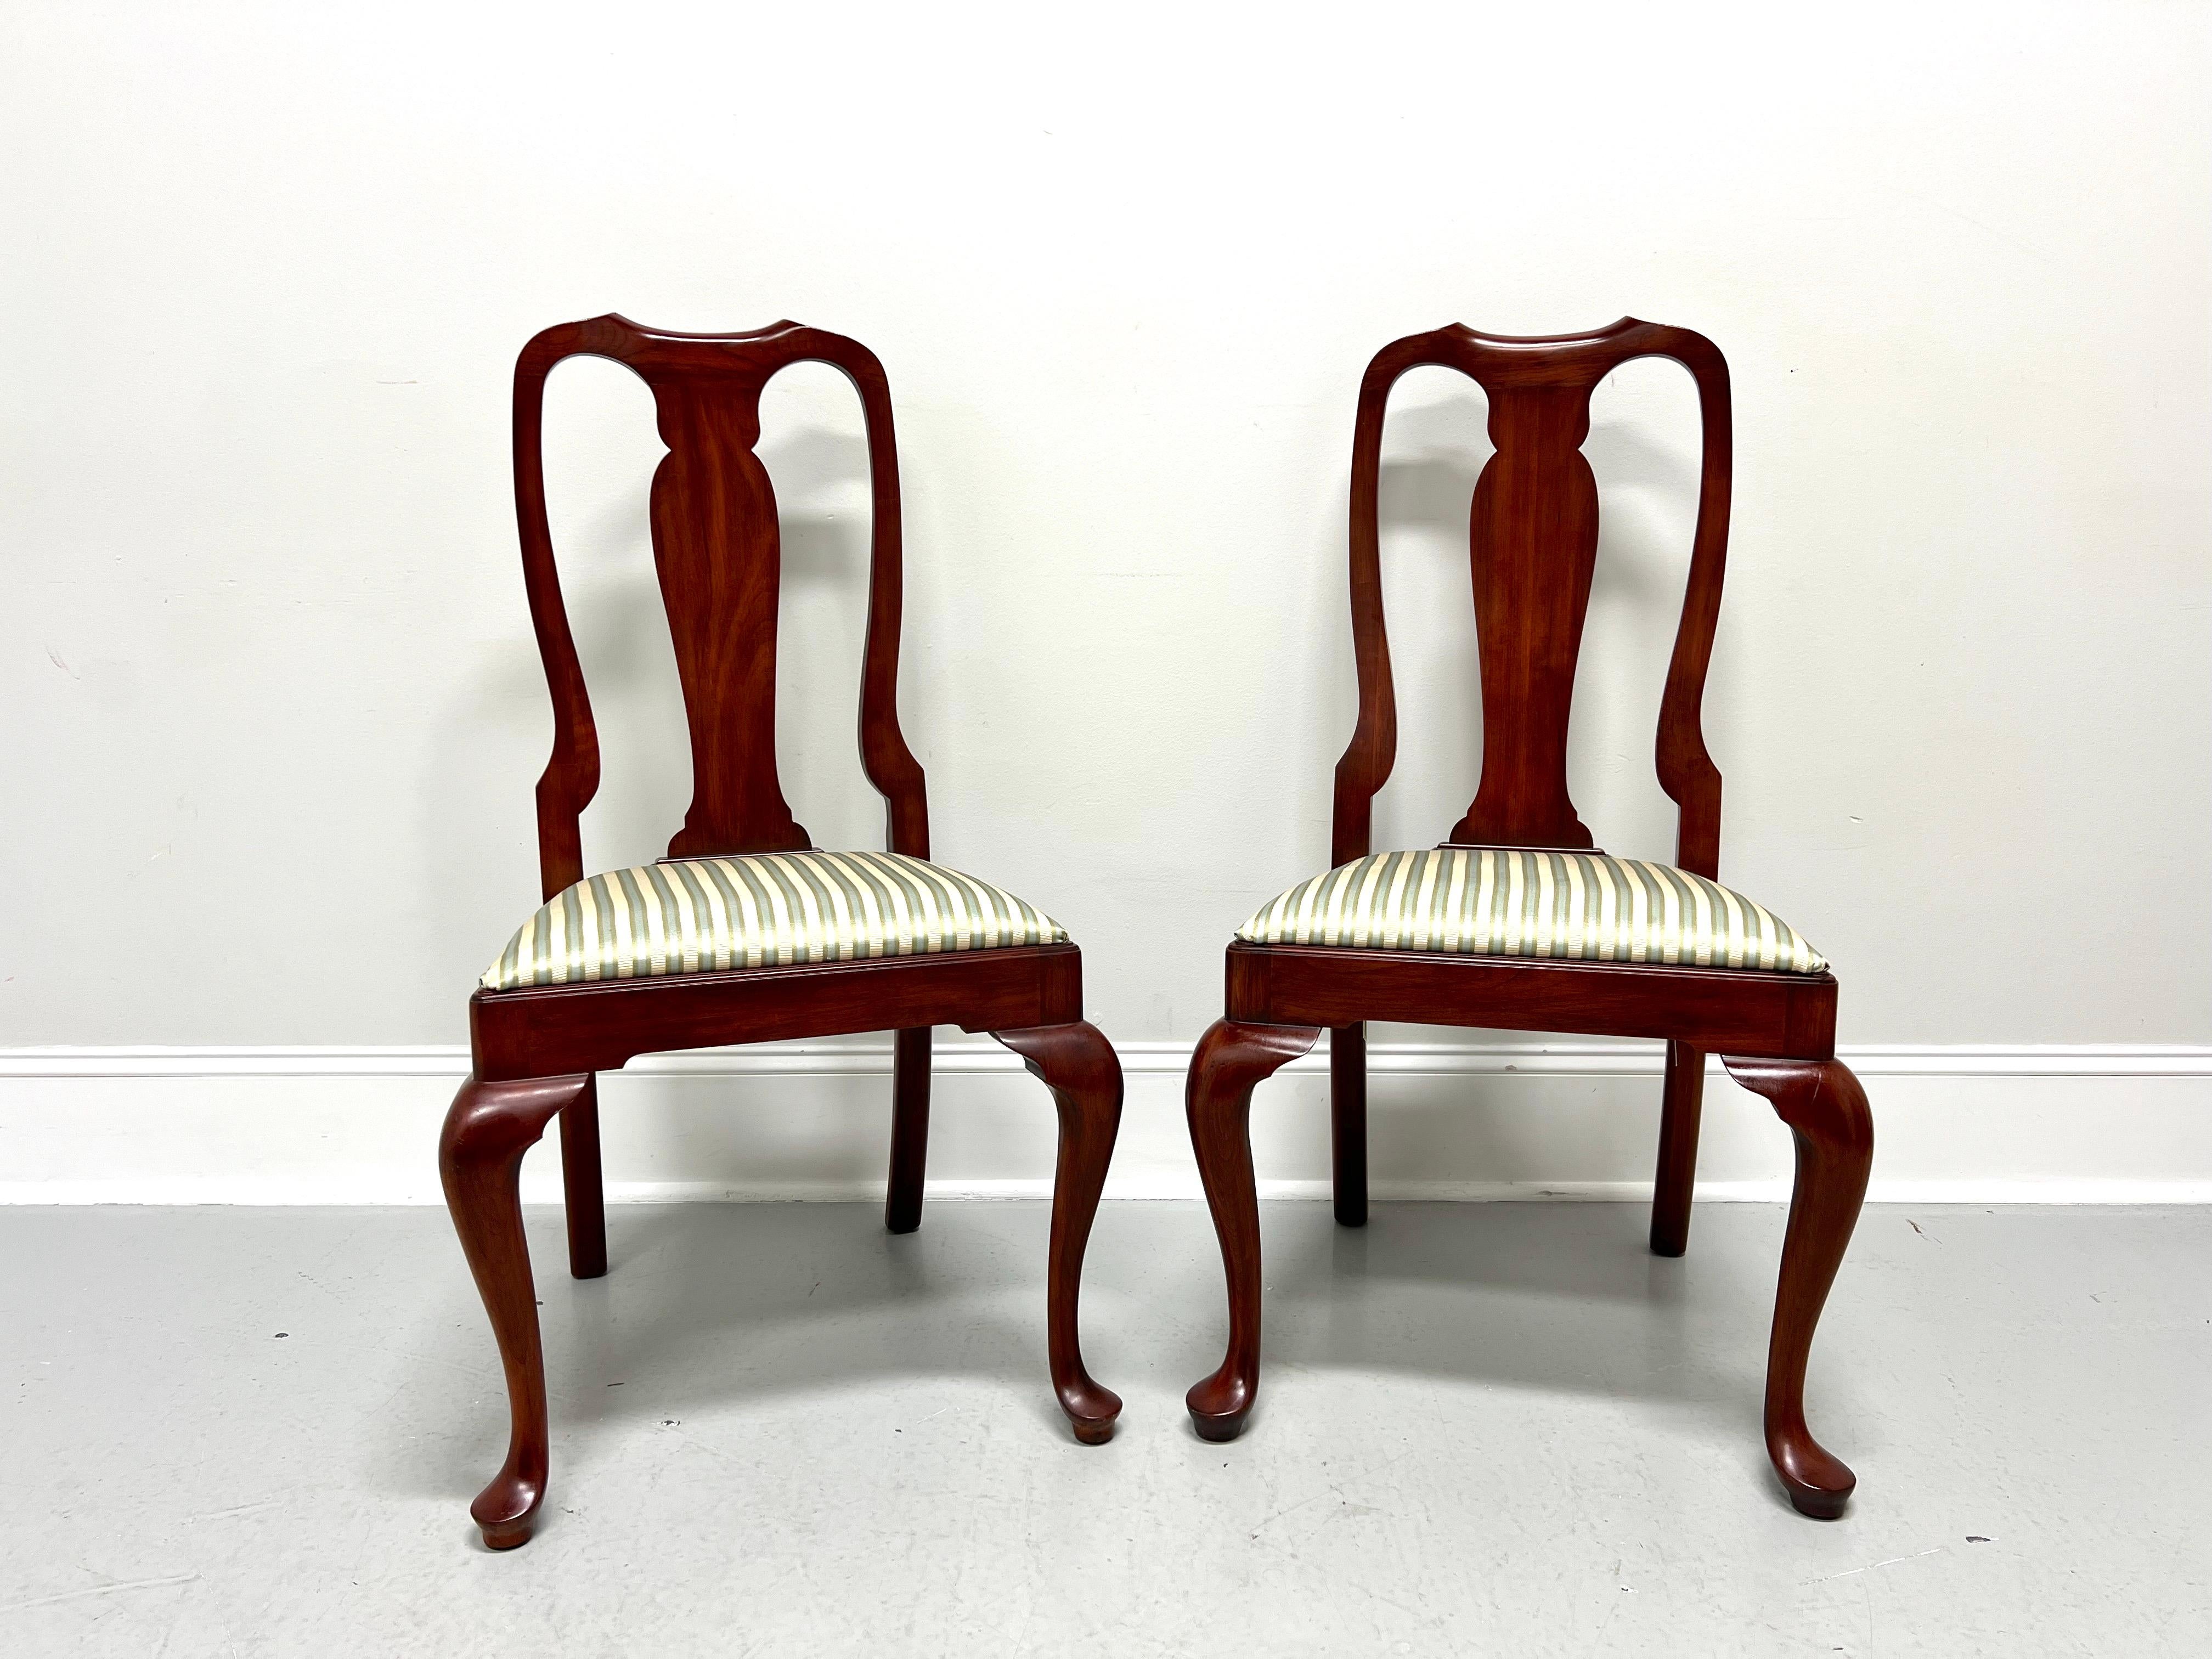 HENKEL HARRIS 105S 24 Wild Black Cherry Queen Anne Dining Side Chairs - Pair A 5